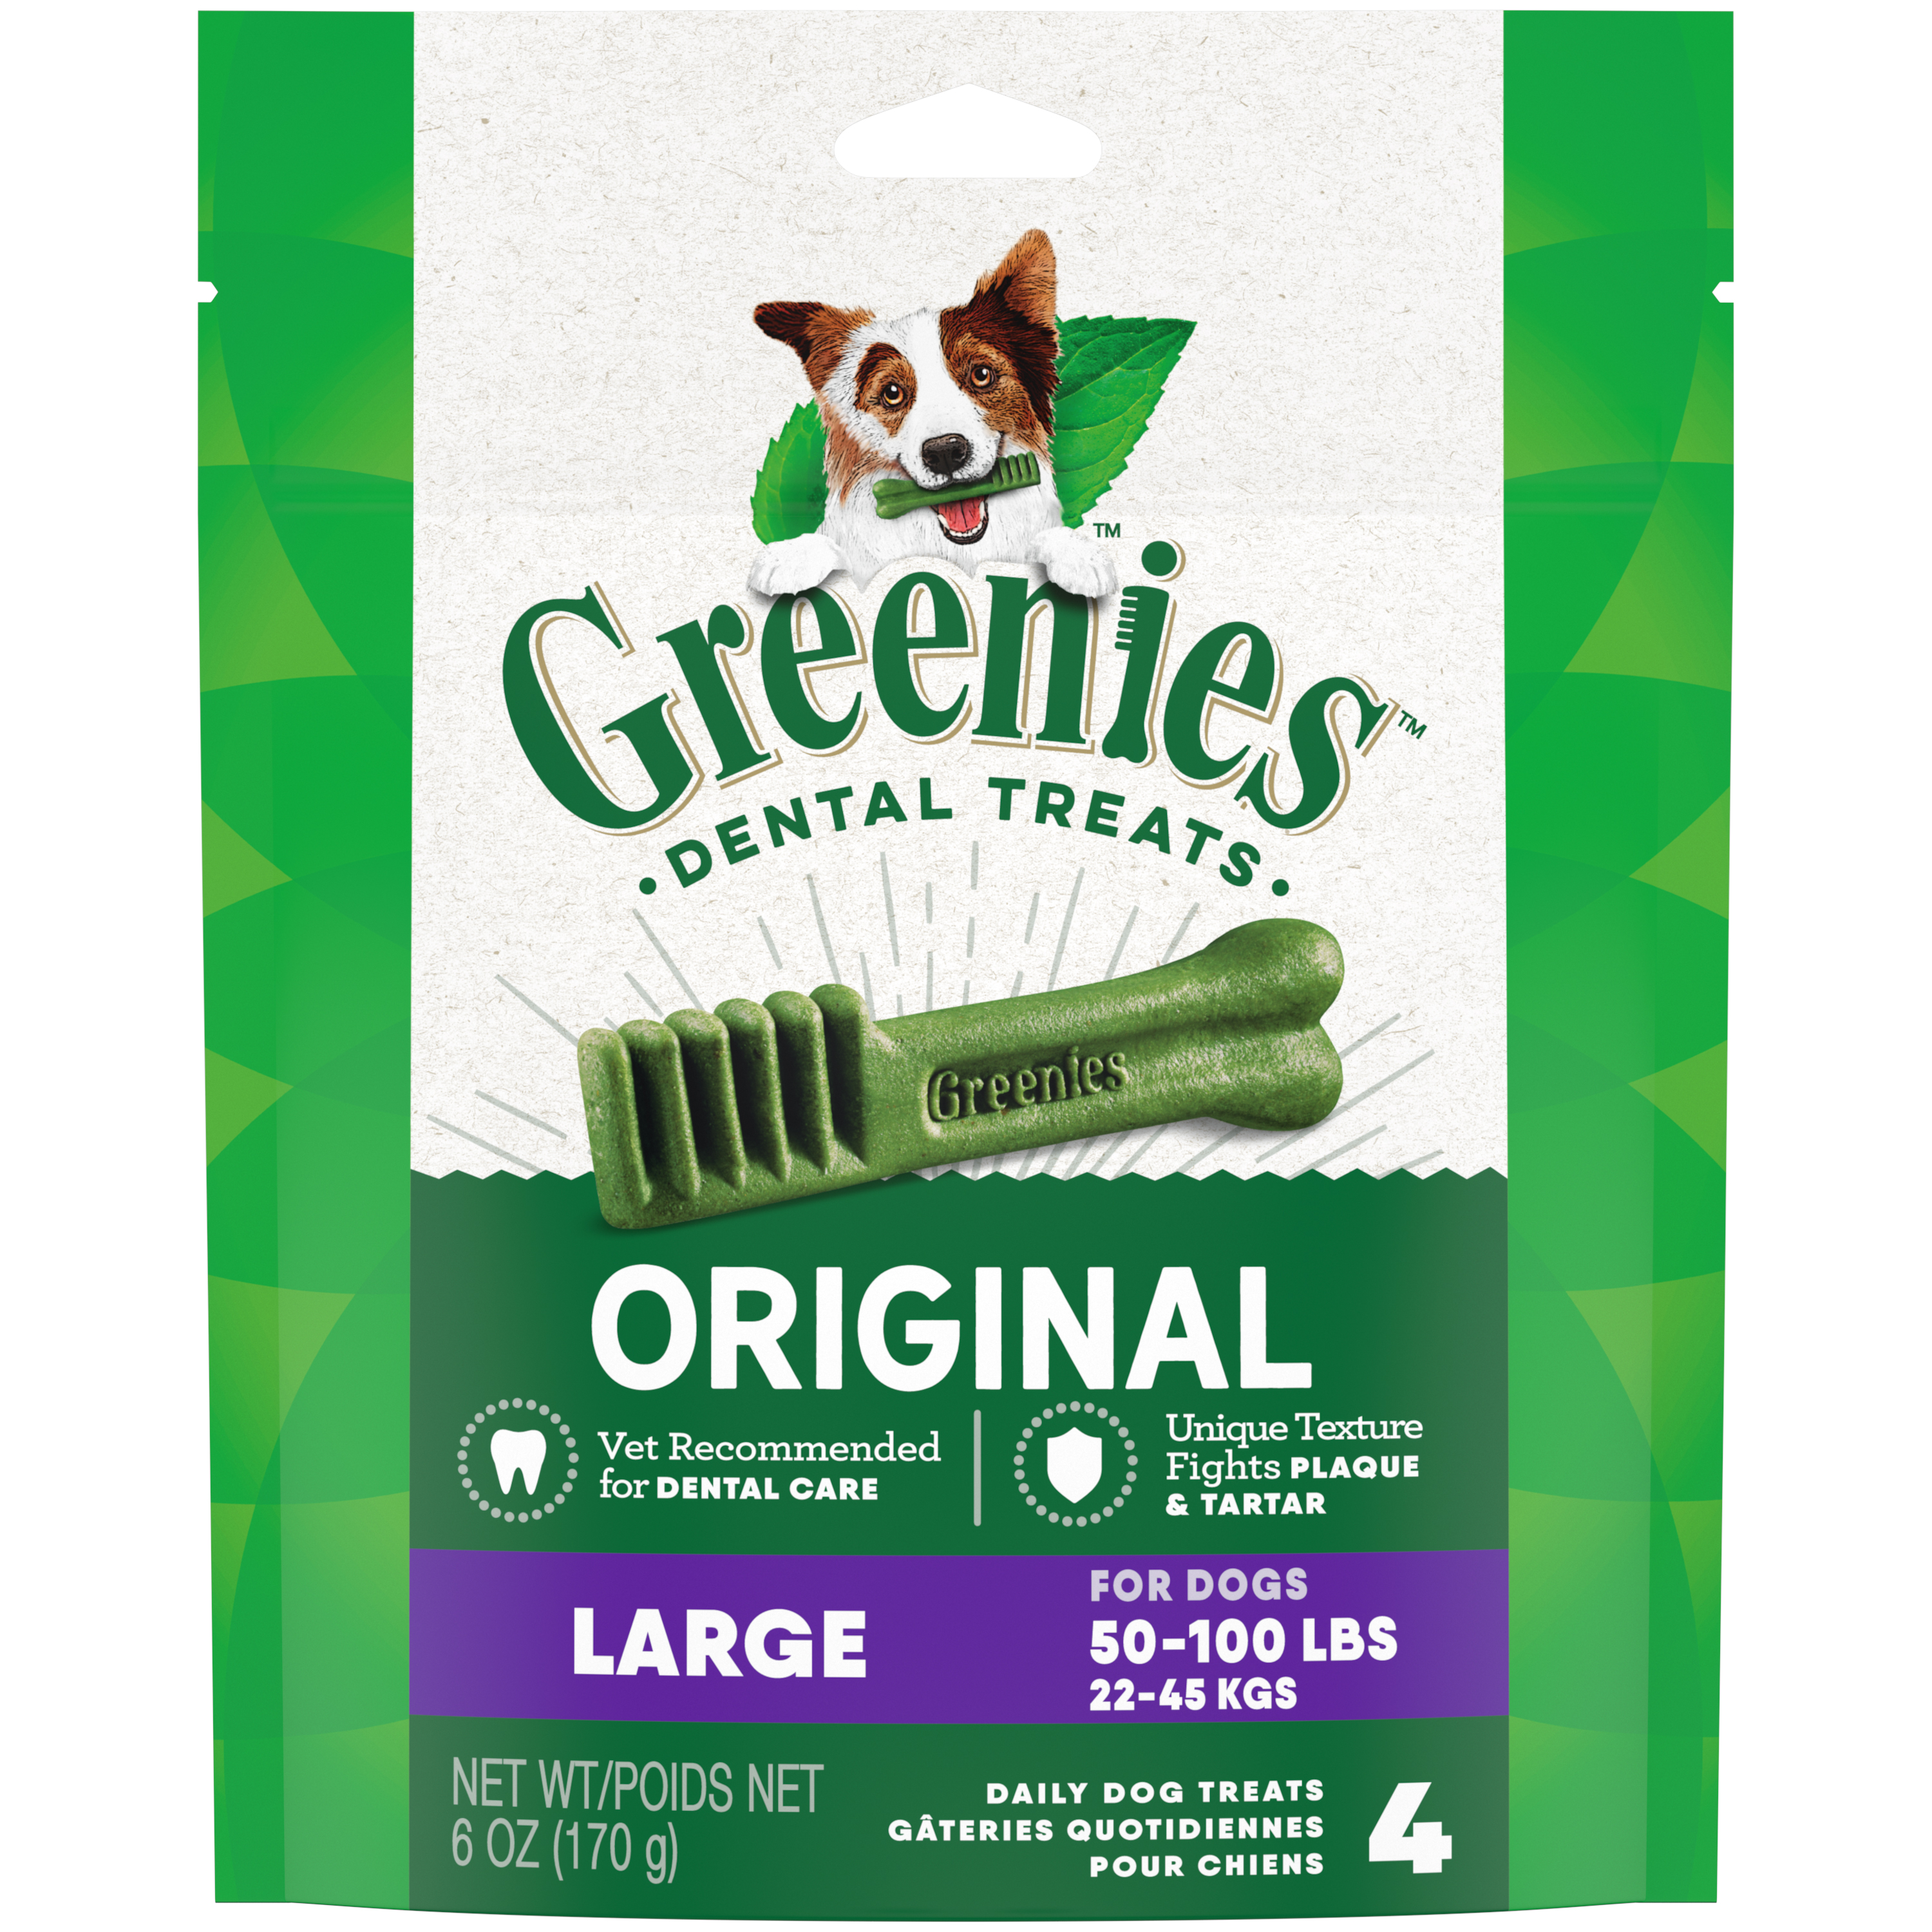 6 oz. Greenies Large Mini Treat Pack (4 Count) - Treats